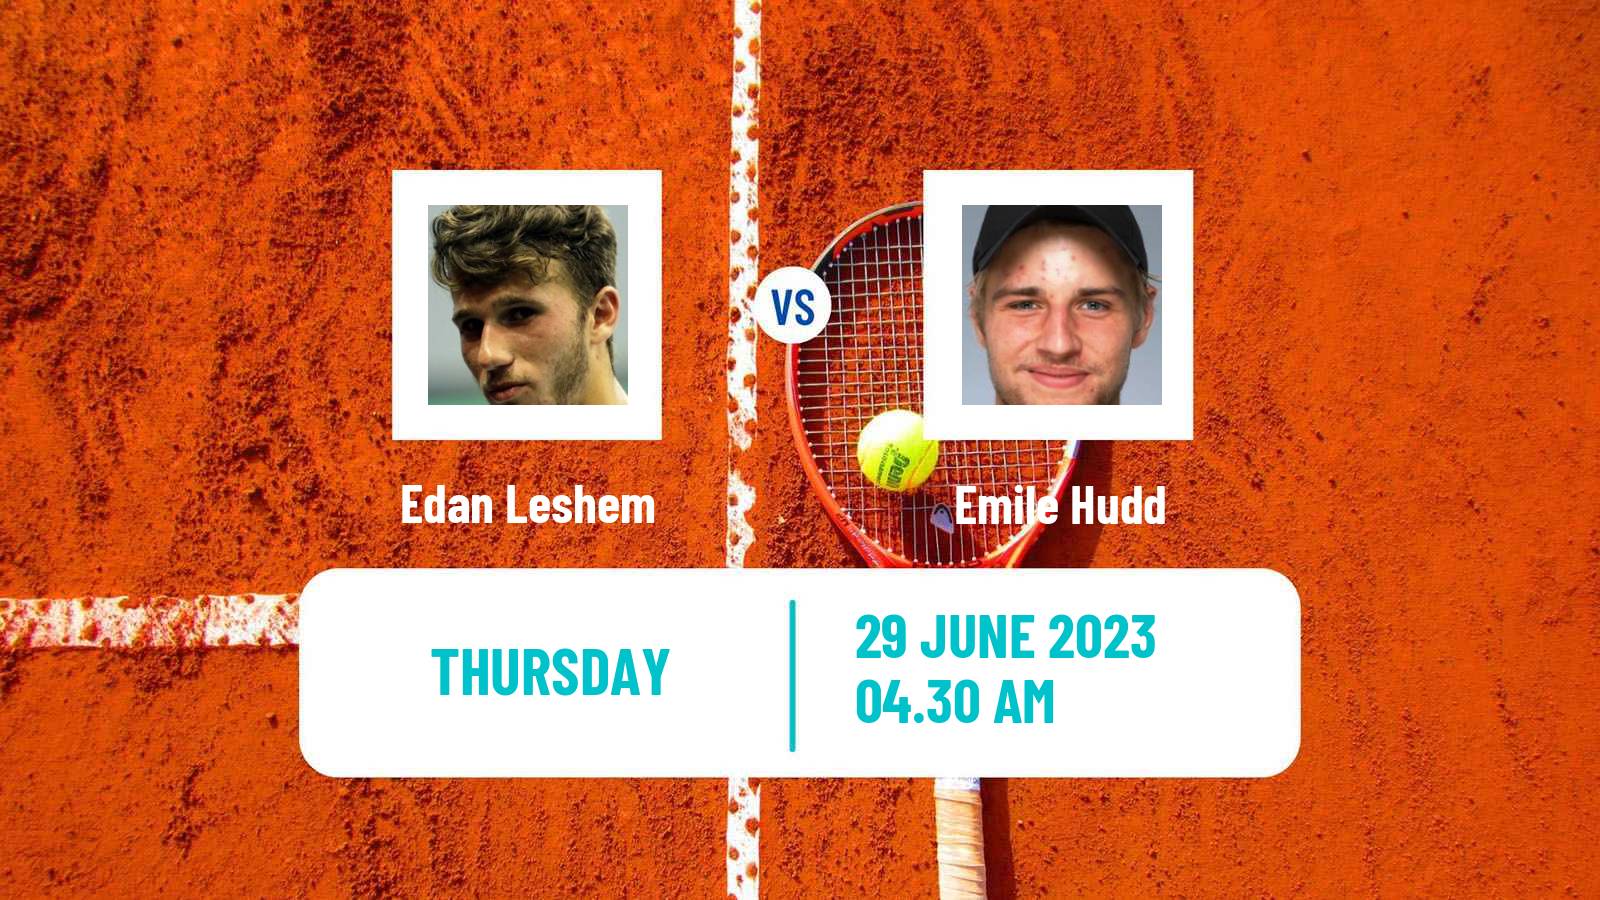 Tennis ITF M25 Netanya 2 Men Edan Leshem - Emile Hudd